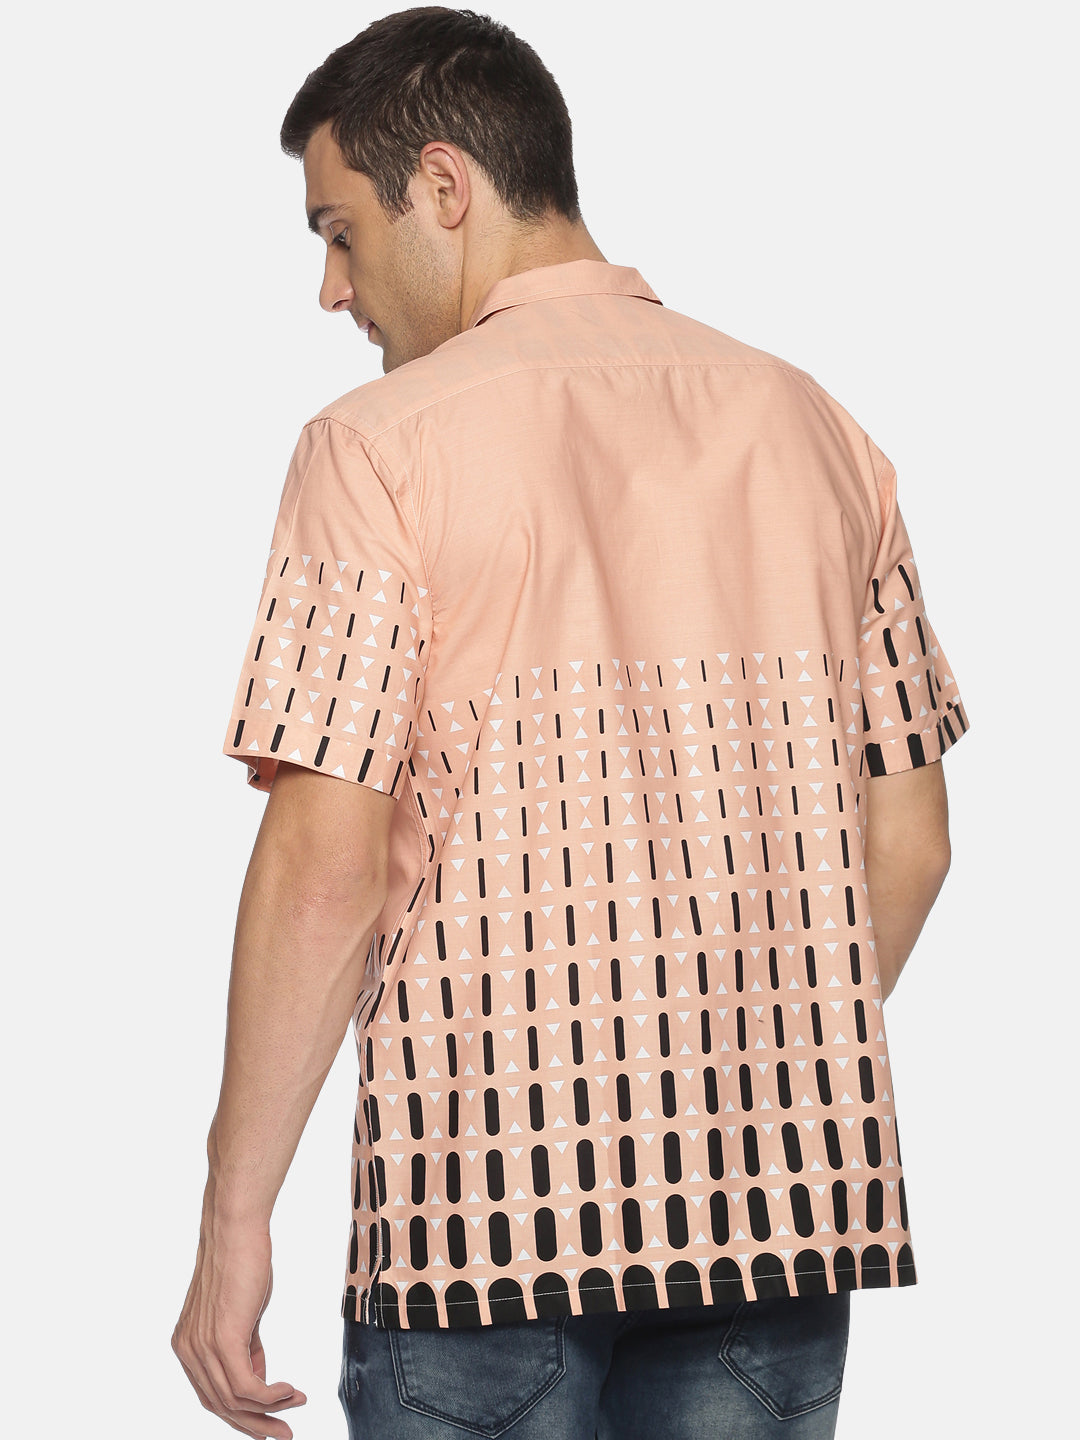 Don Vino Men's Peach Printed Half Sleeve Shirt